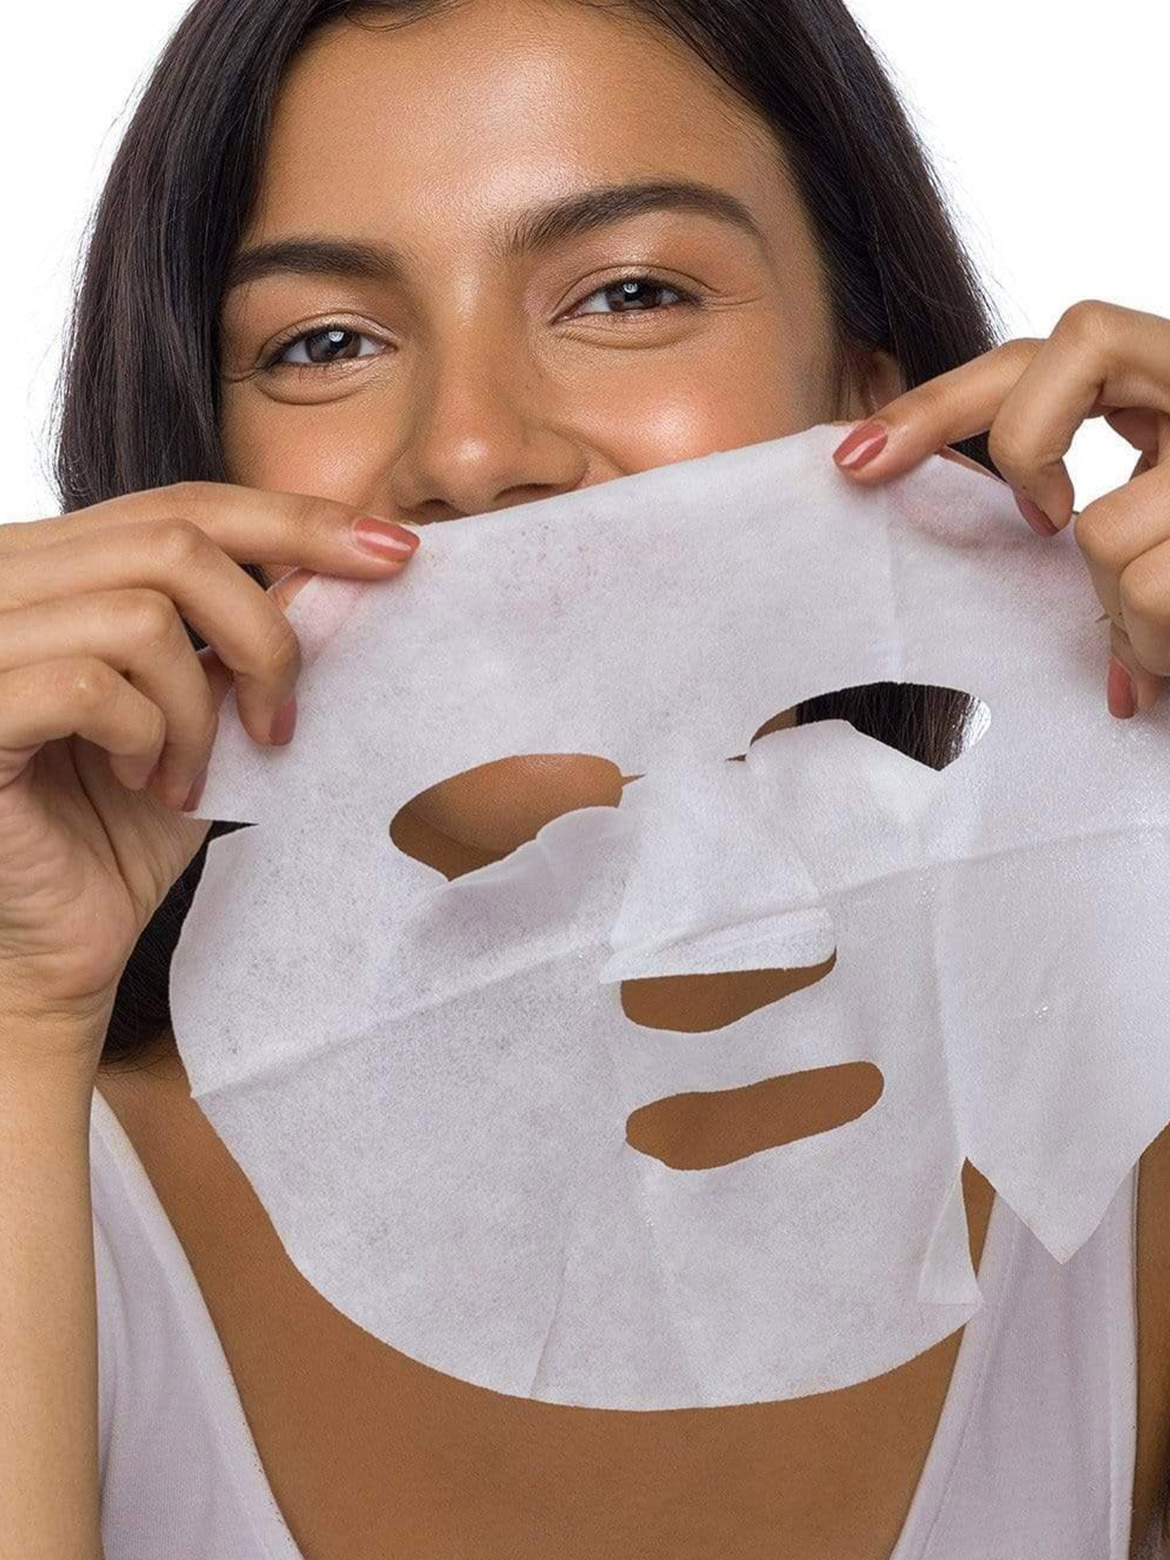 Facial Mask for Women